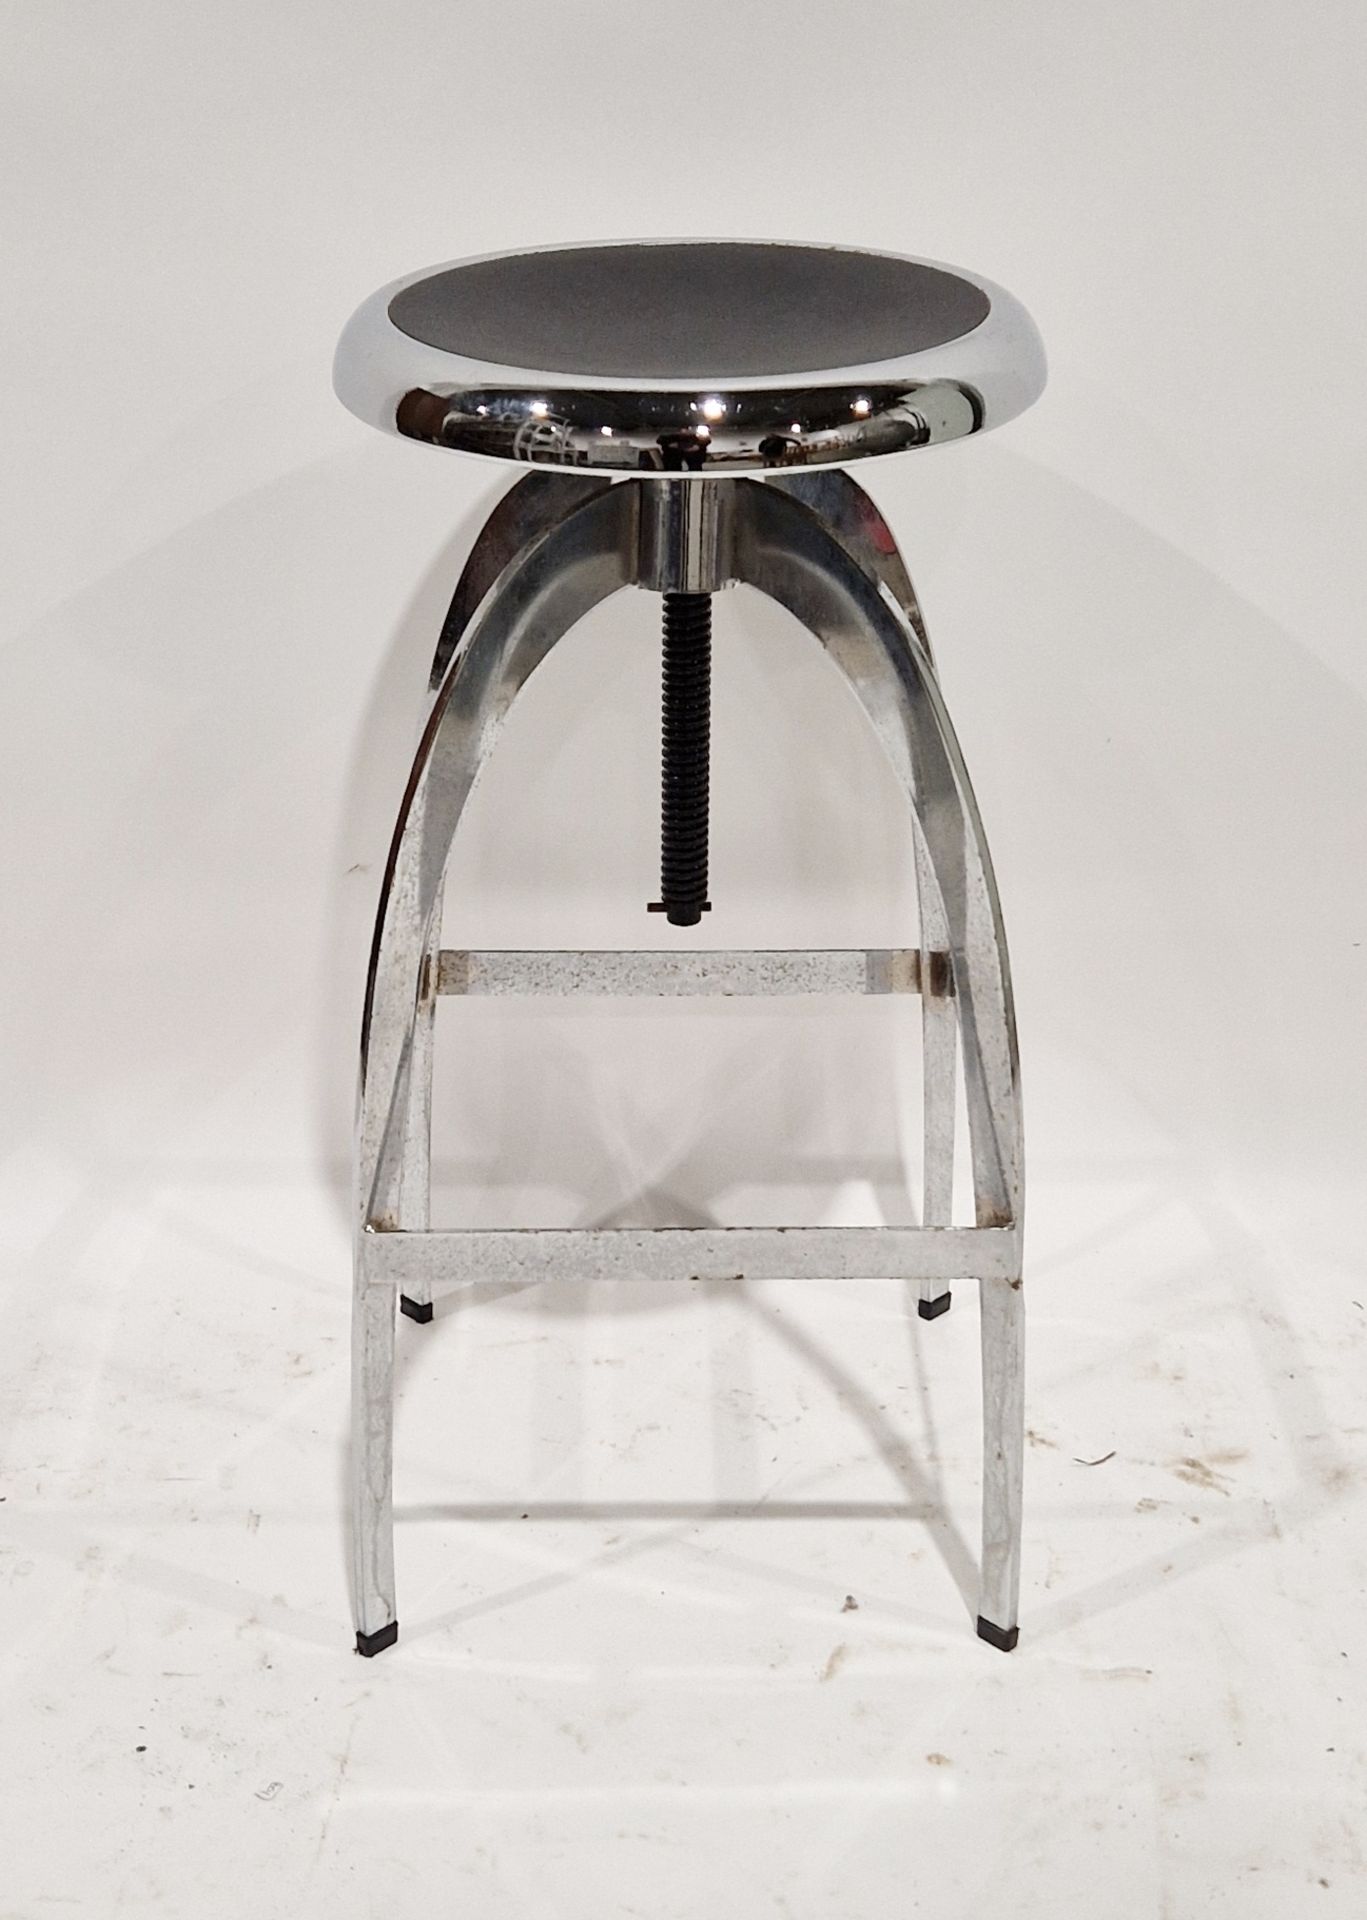 Modern chrome adjustable bar stool, 68cm high - Image 2 of 3